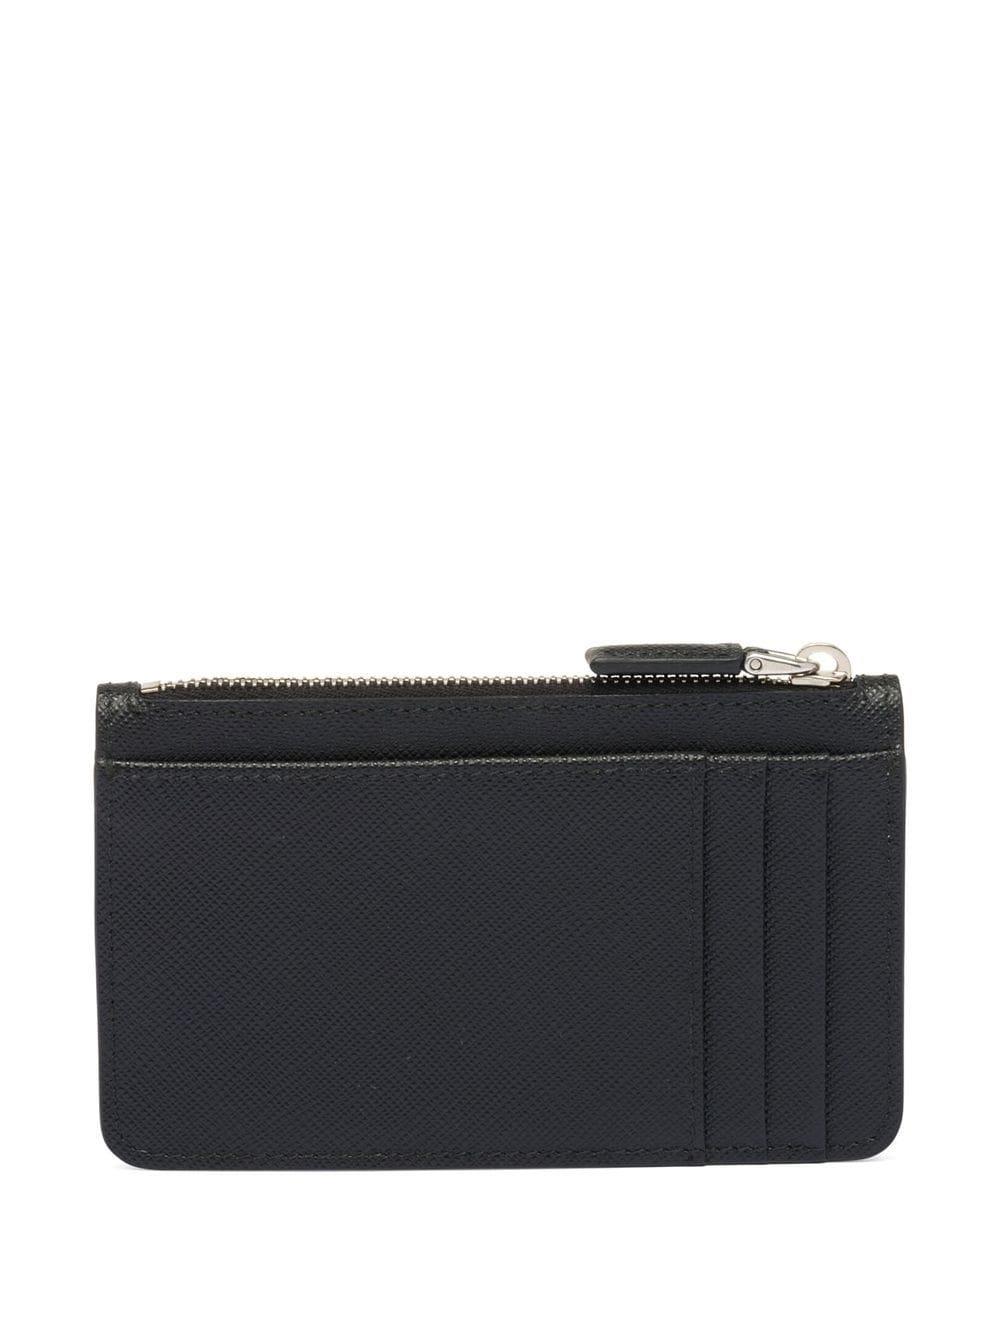 Prada Saffiano leather card holder - Black